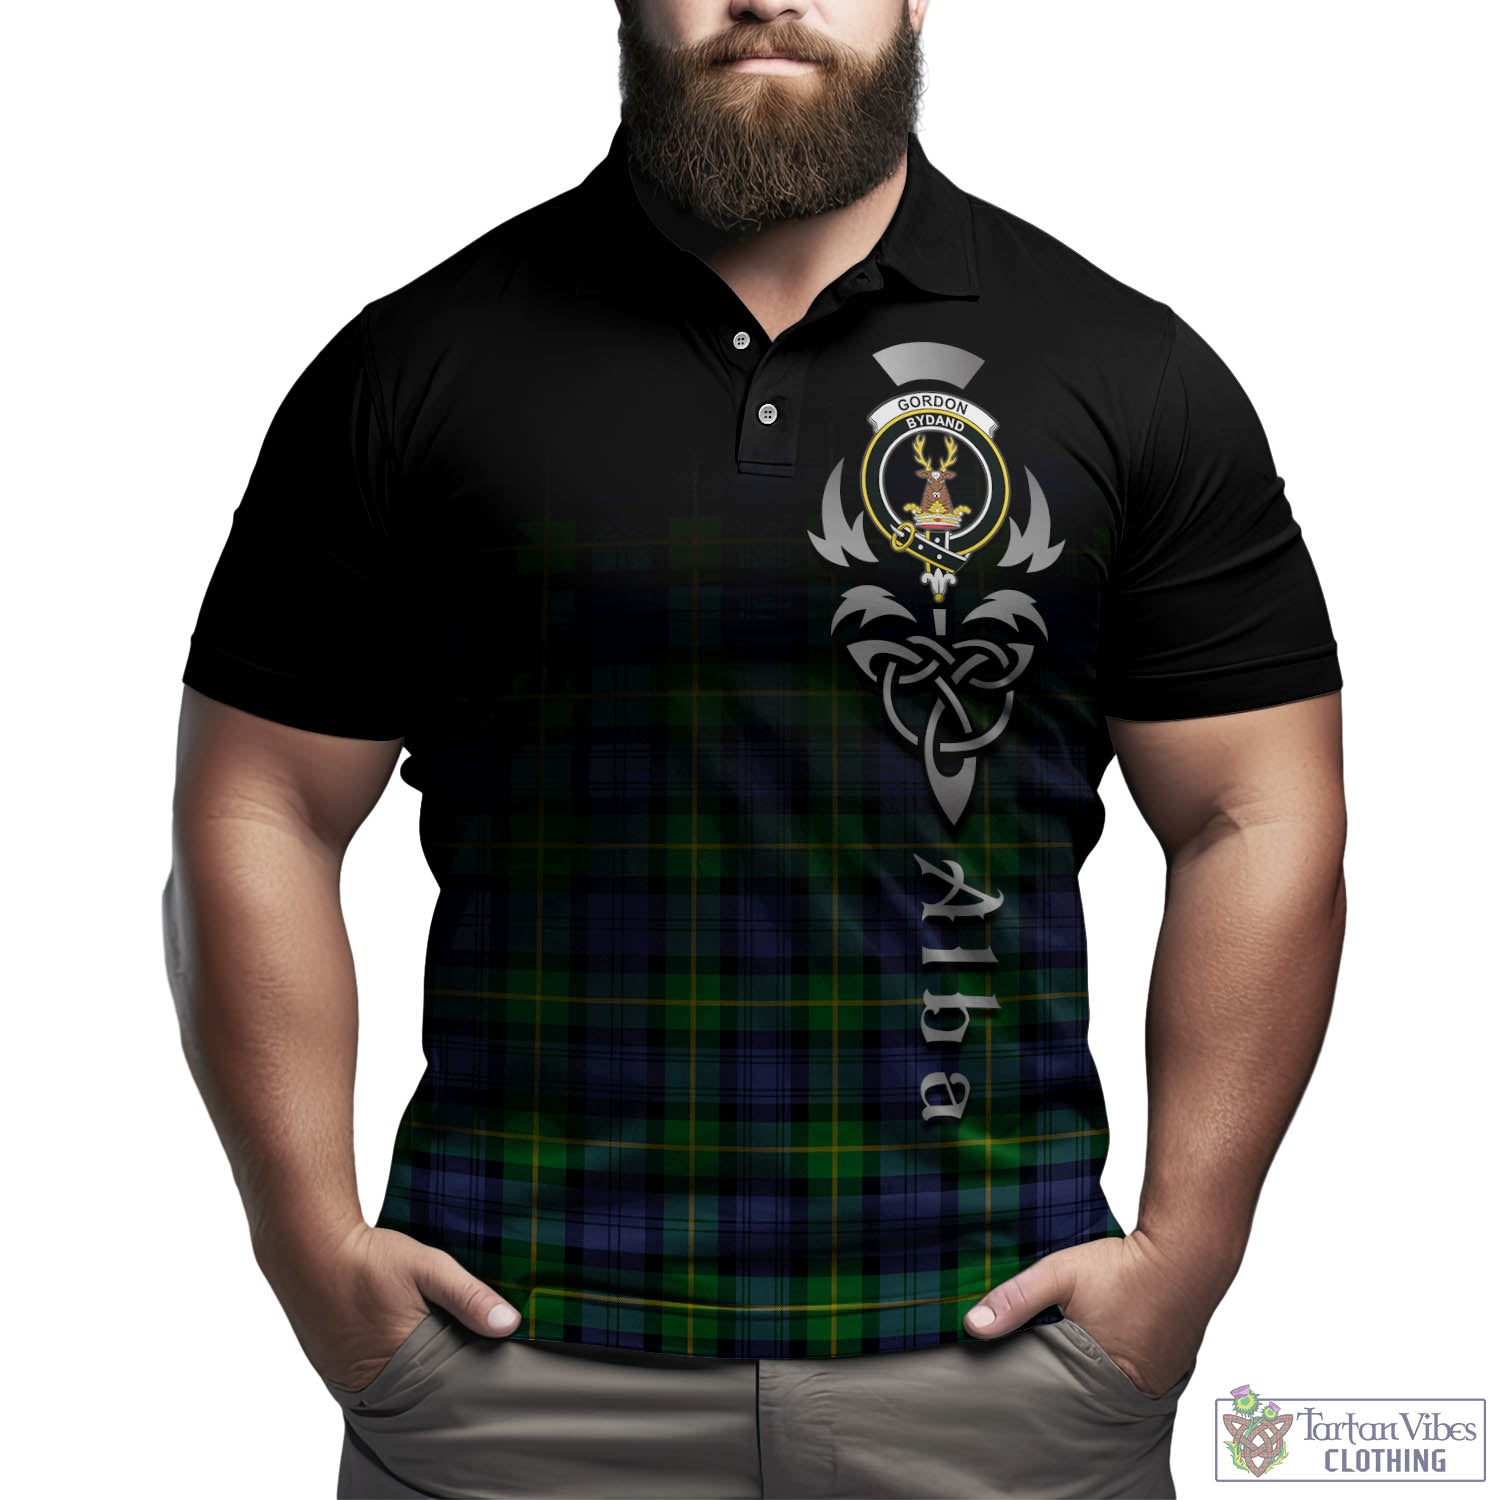 Tartan Vibes Clothing Gordon Modern Tartan Polo Shirt Featuring Alba Gu Brath Family Crest Celtic Inspired